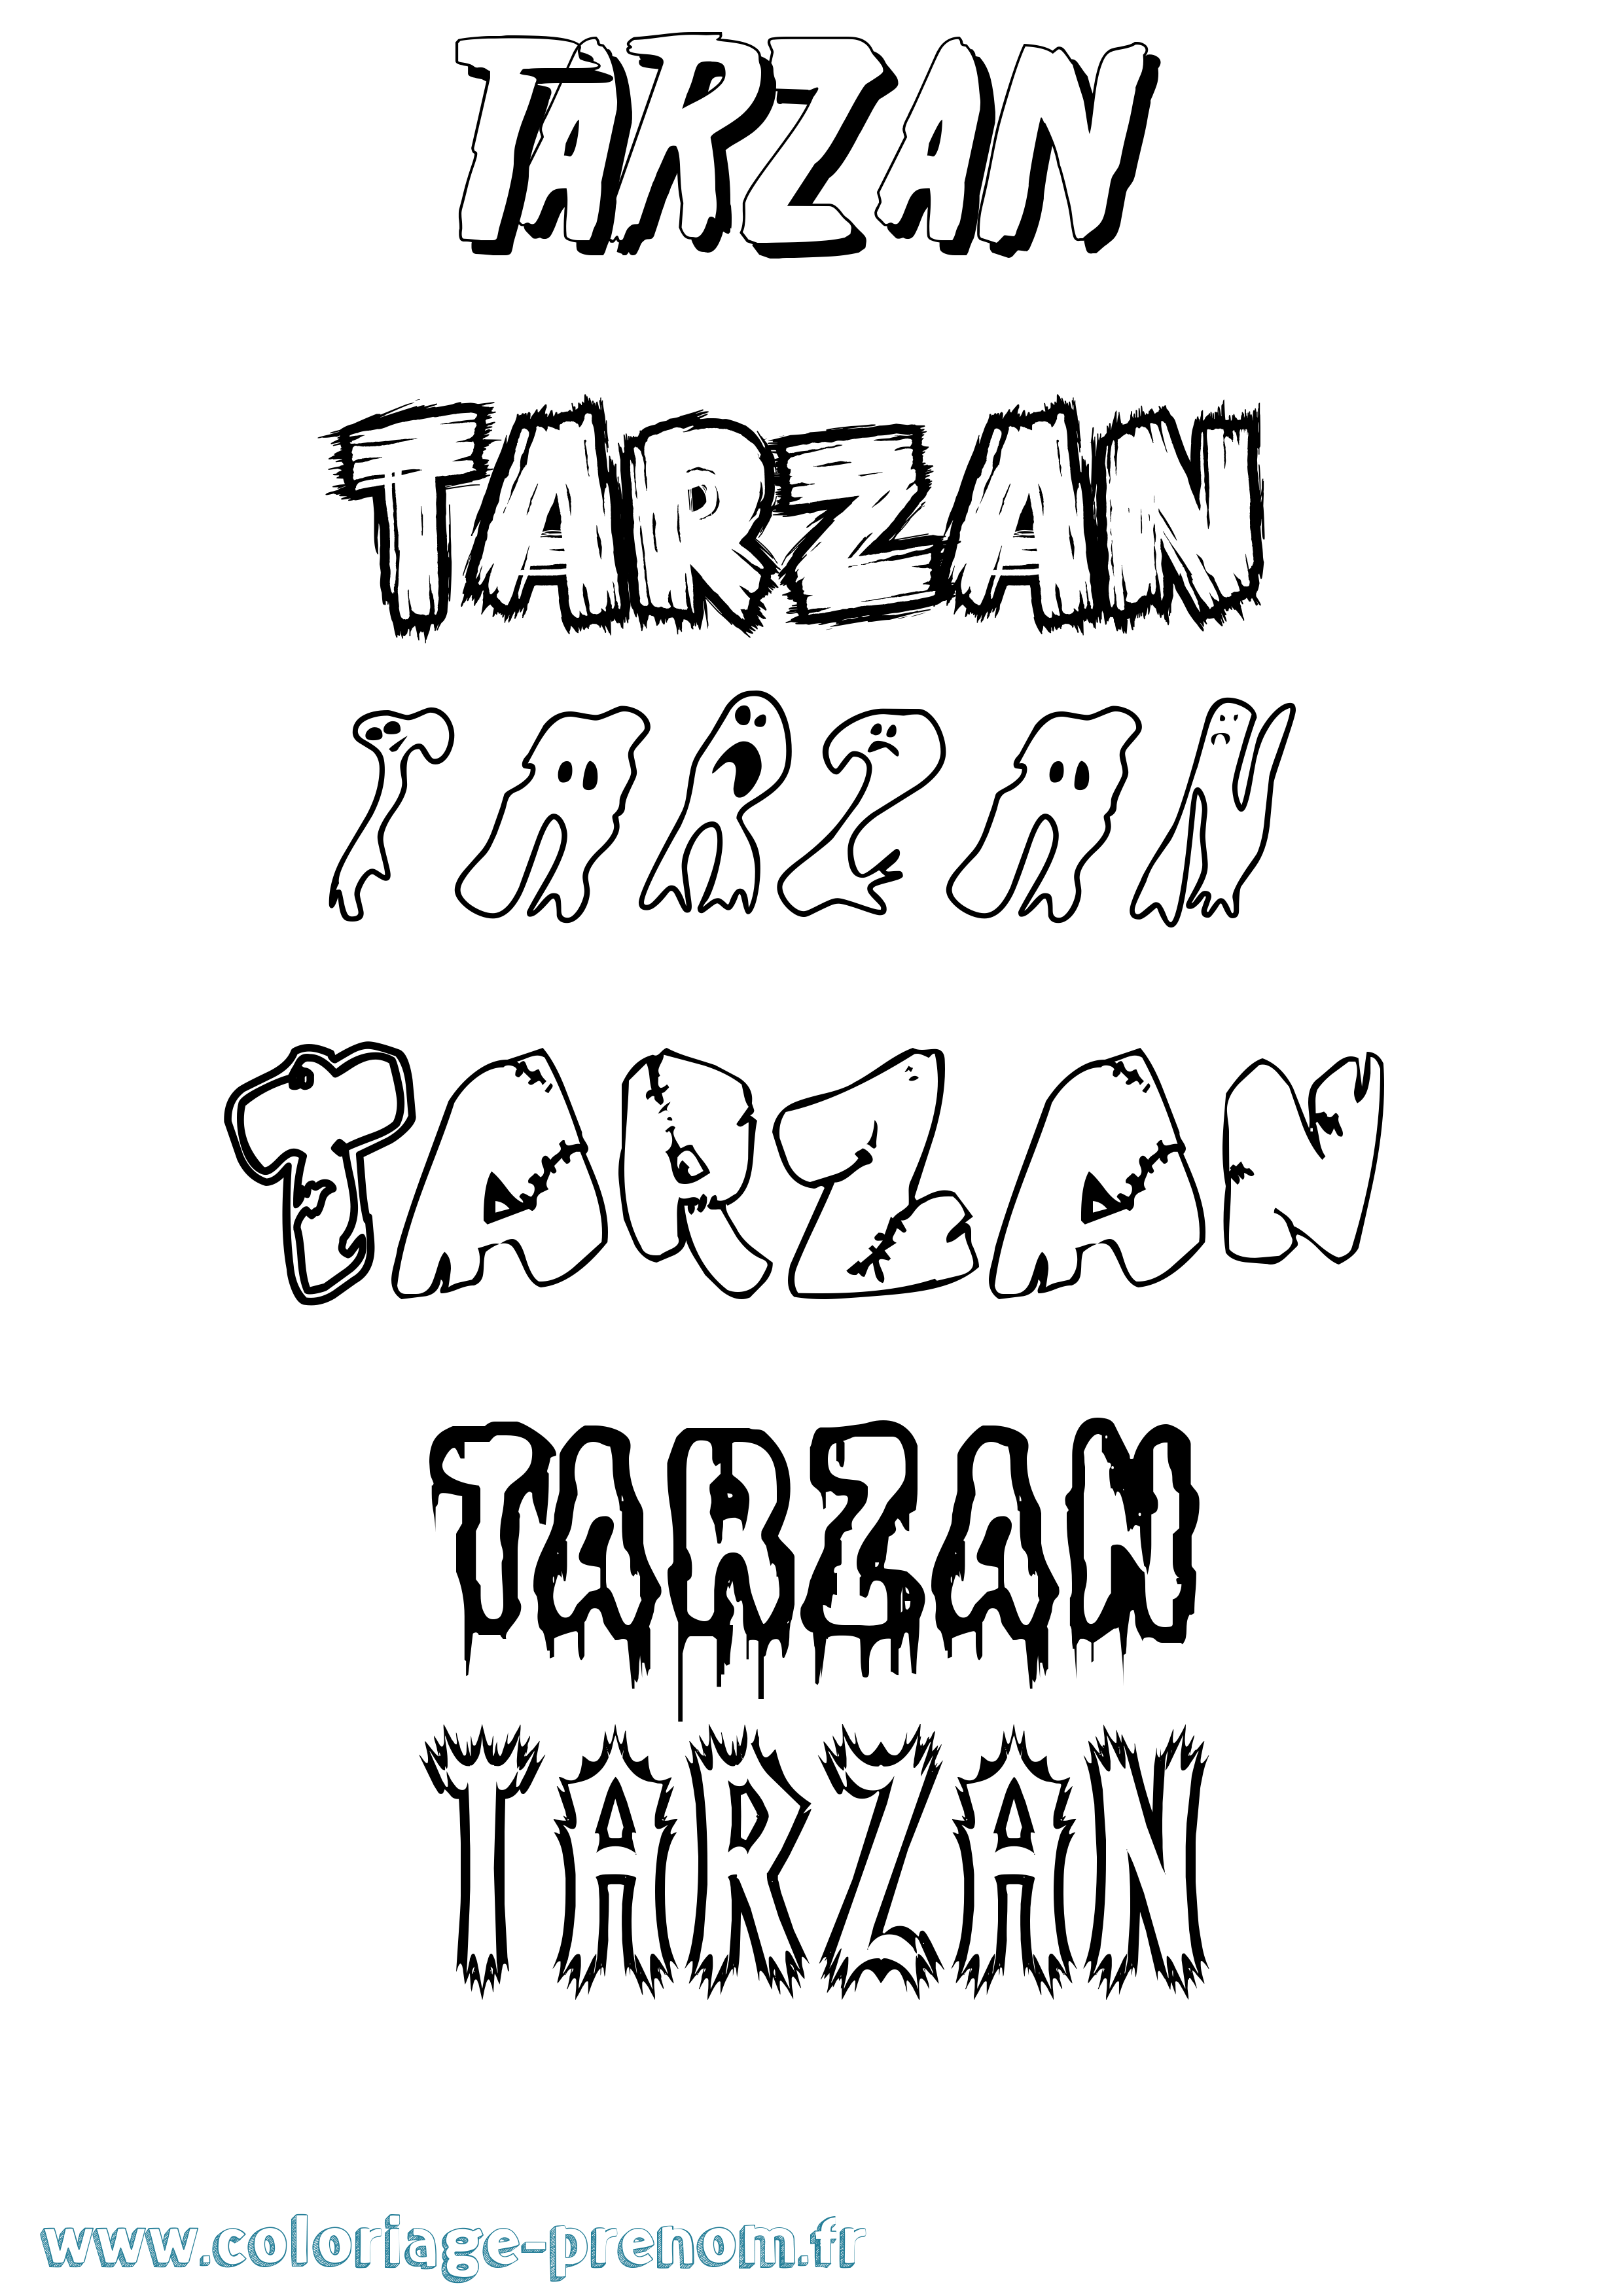 Coloriage prénom Tarzan Frisson